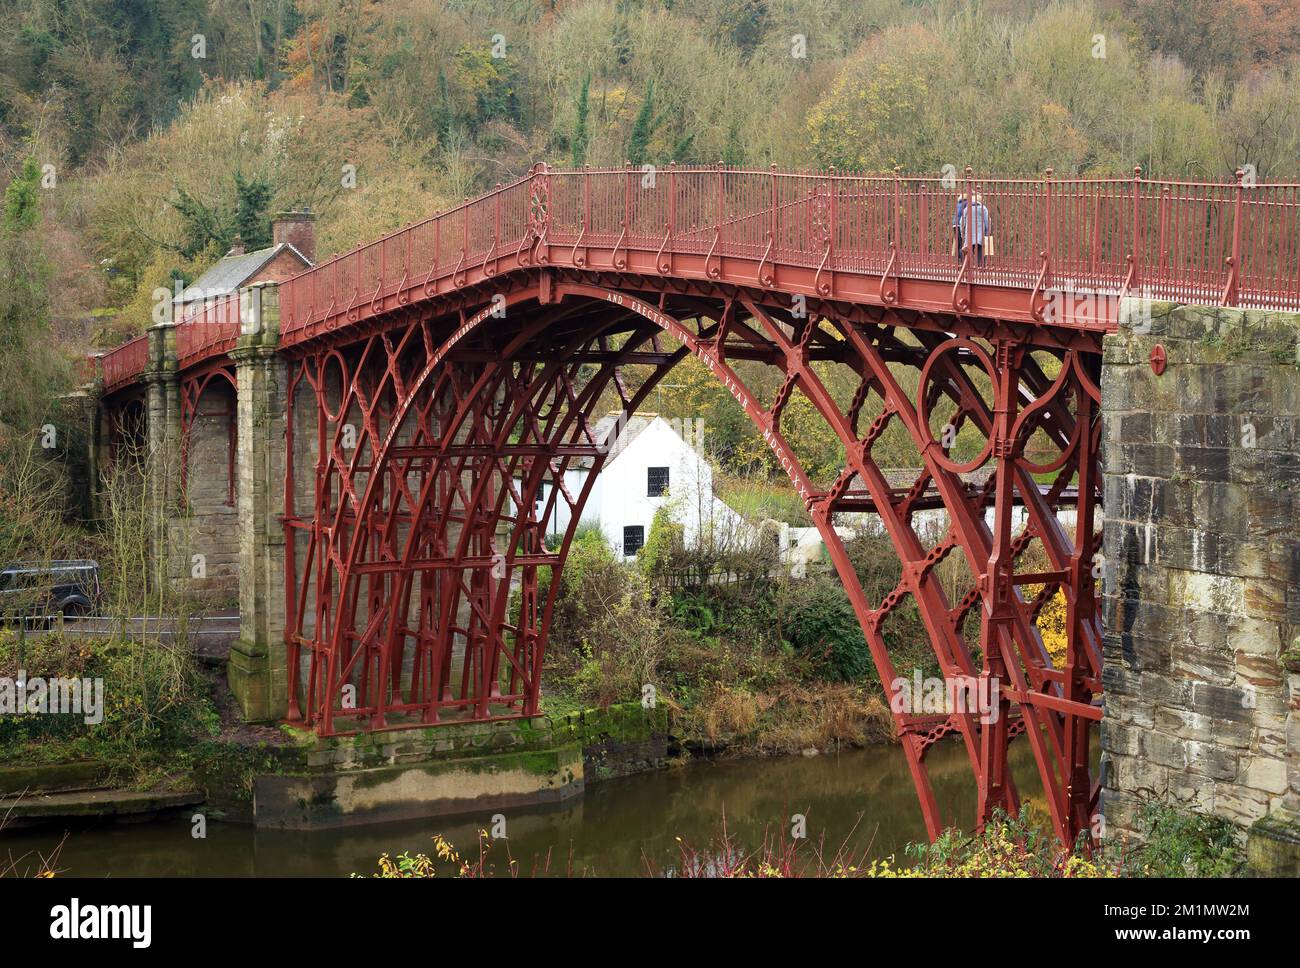 The Iron bridge over the river Severn at Ironbridge, Telford, Shropshire, England, UK. Stock Photo